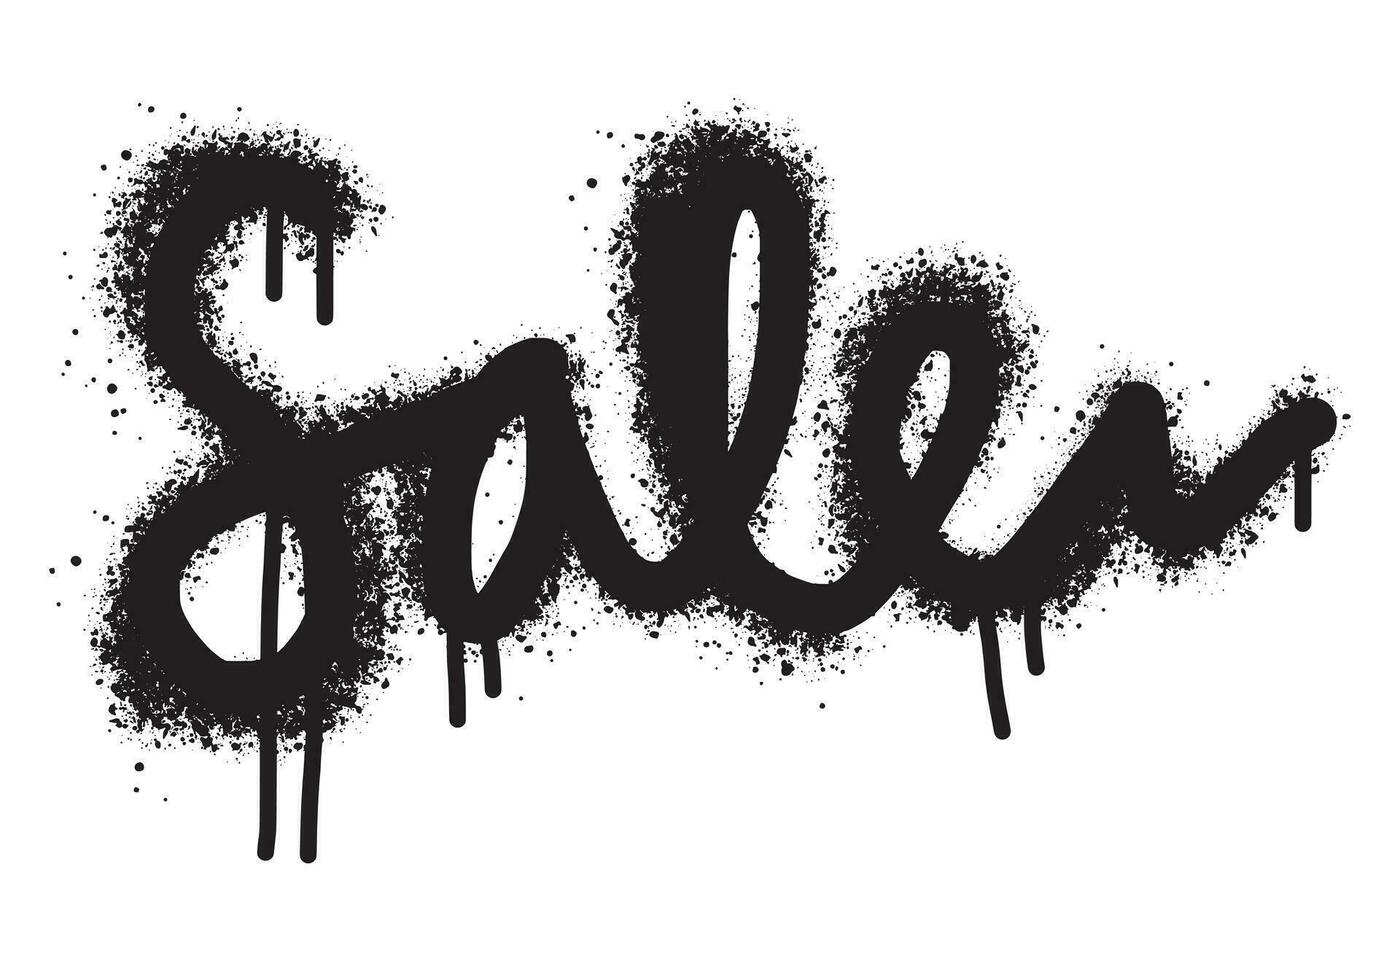 graffiti sale text sprayed in black over white. vector